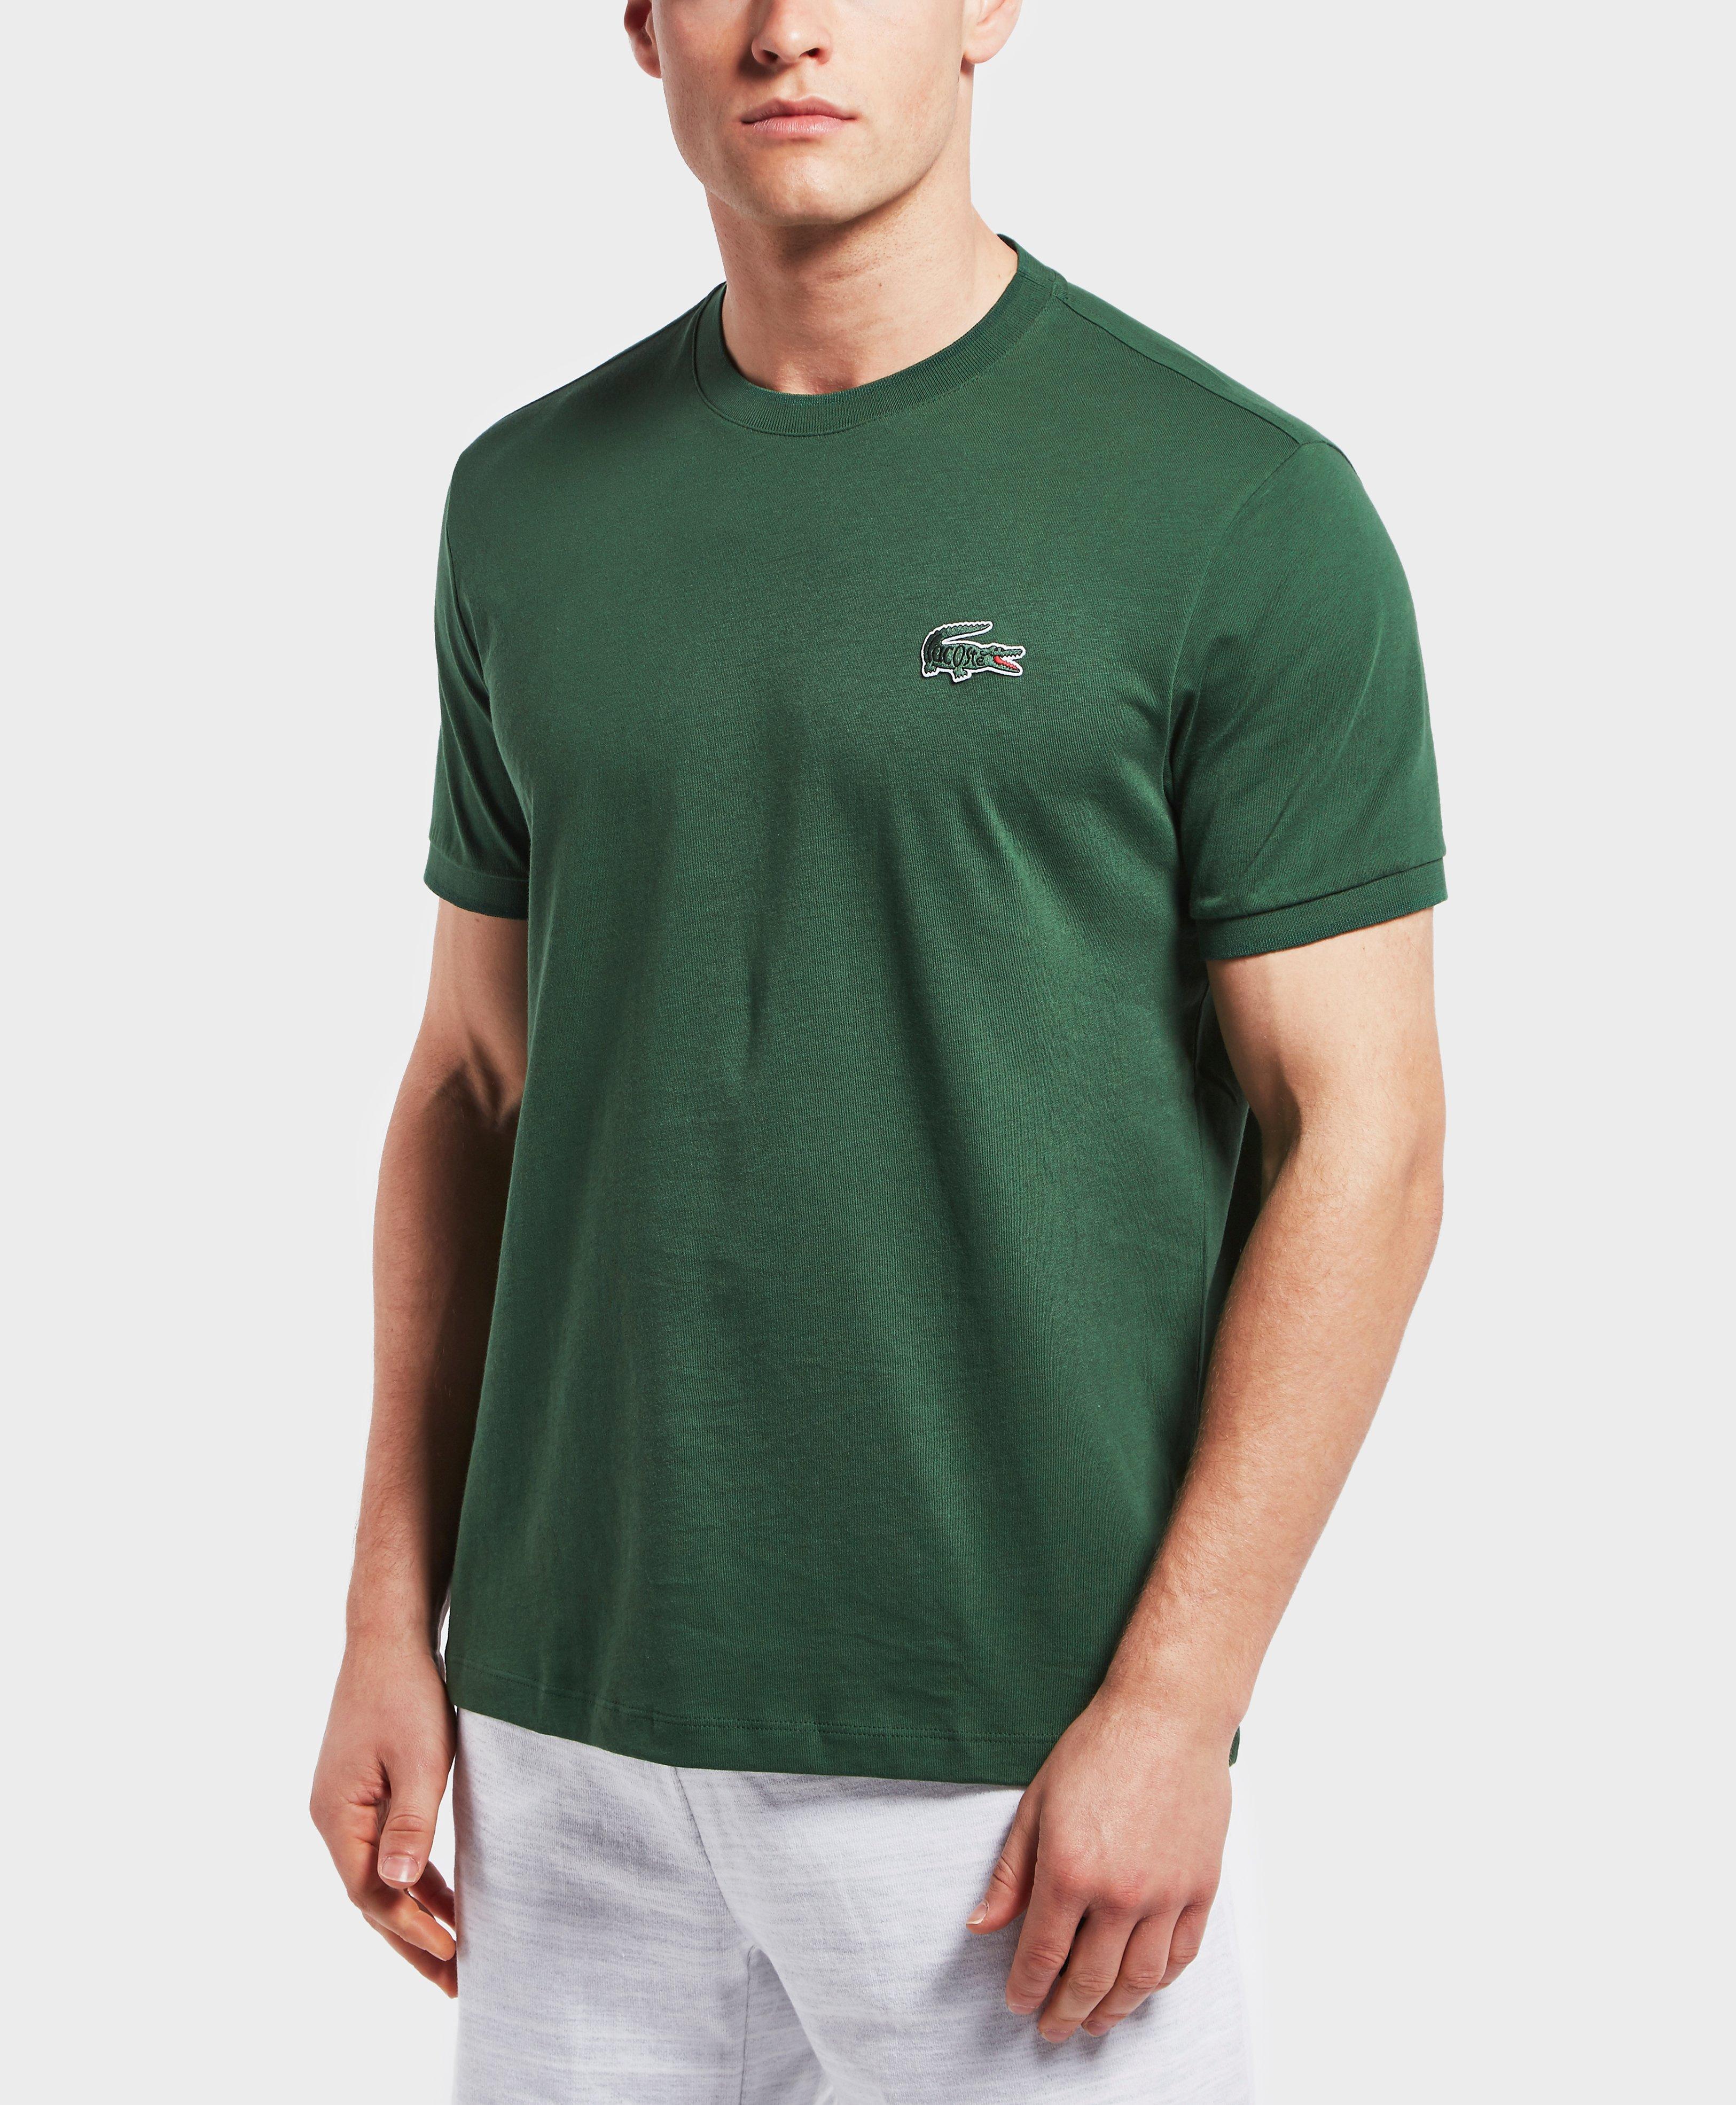 Lacoste Cotton Big Croc Logo Short Sleeve T-shirt in Green for Men - Lyst